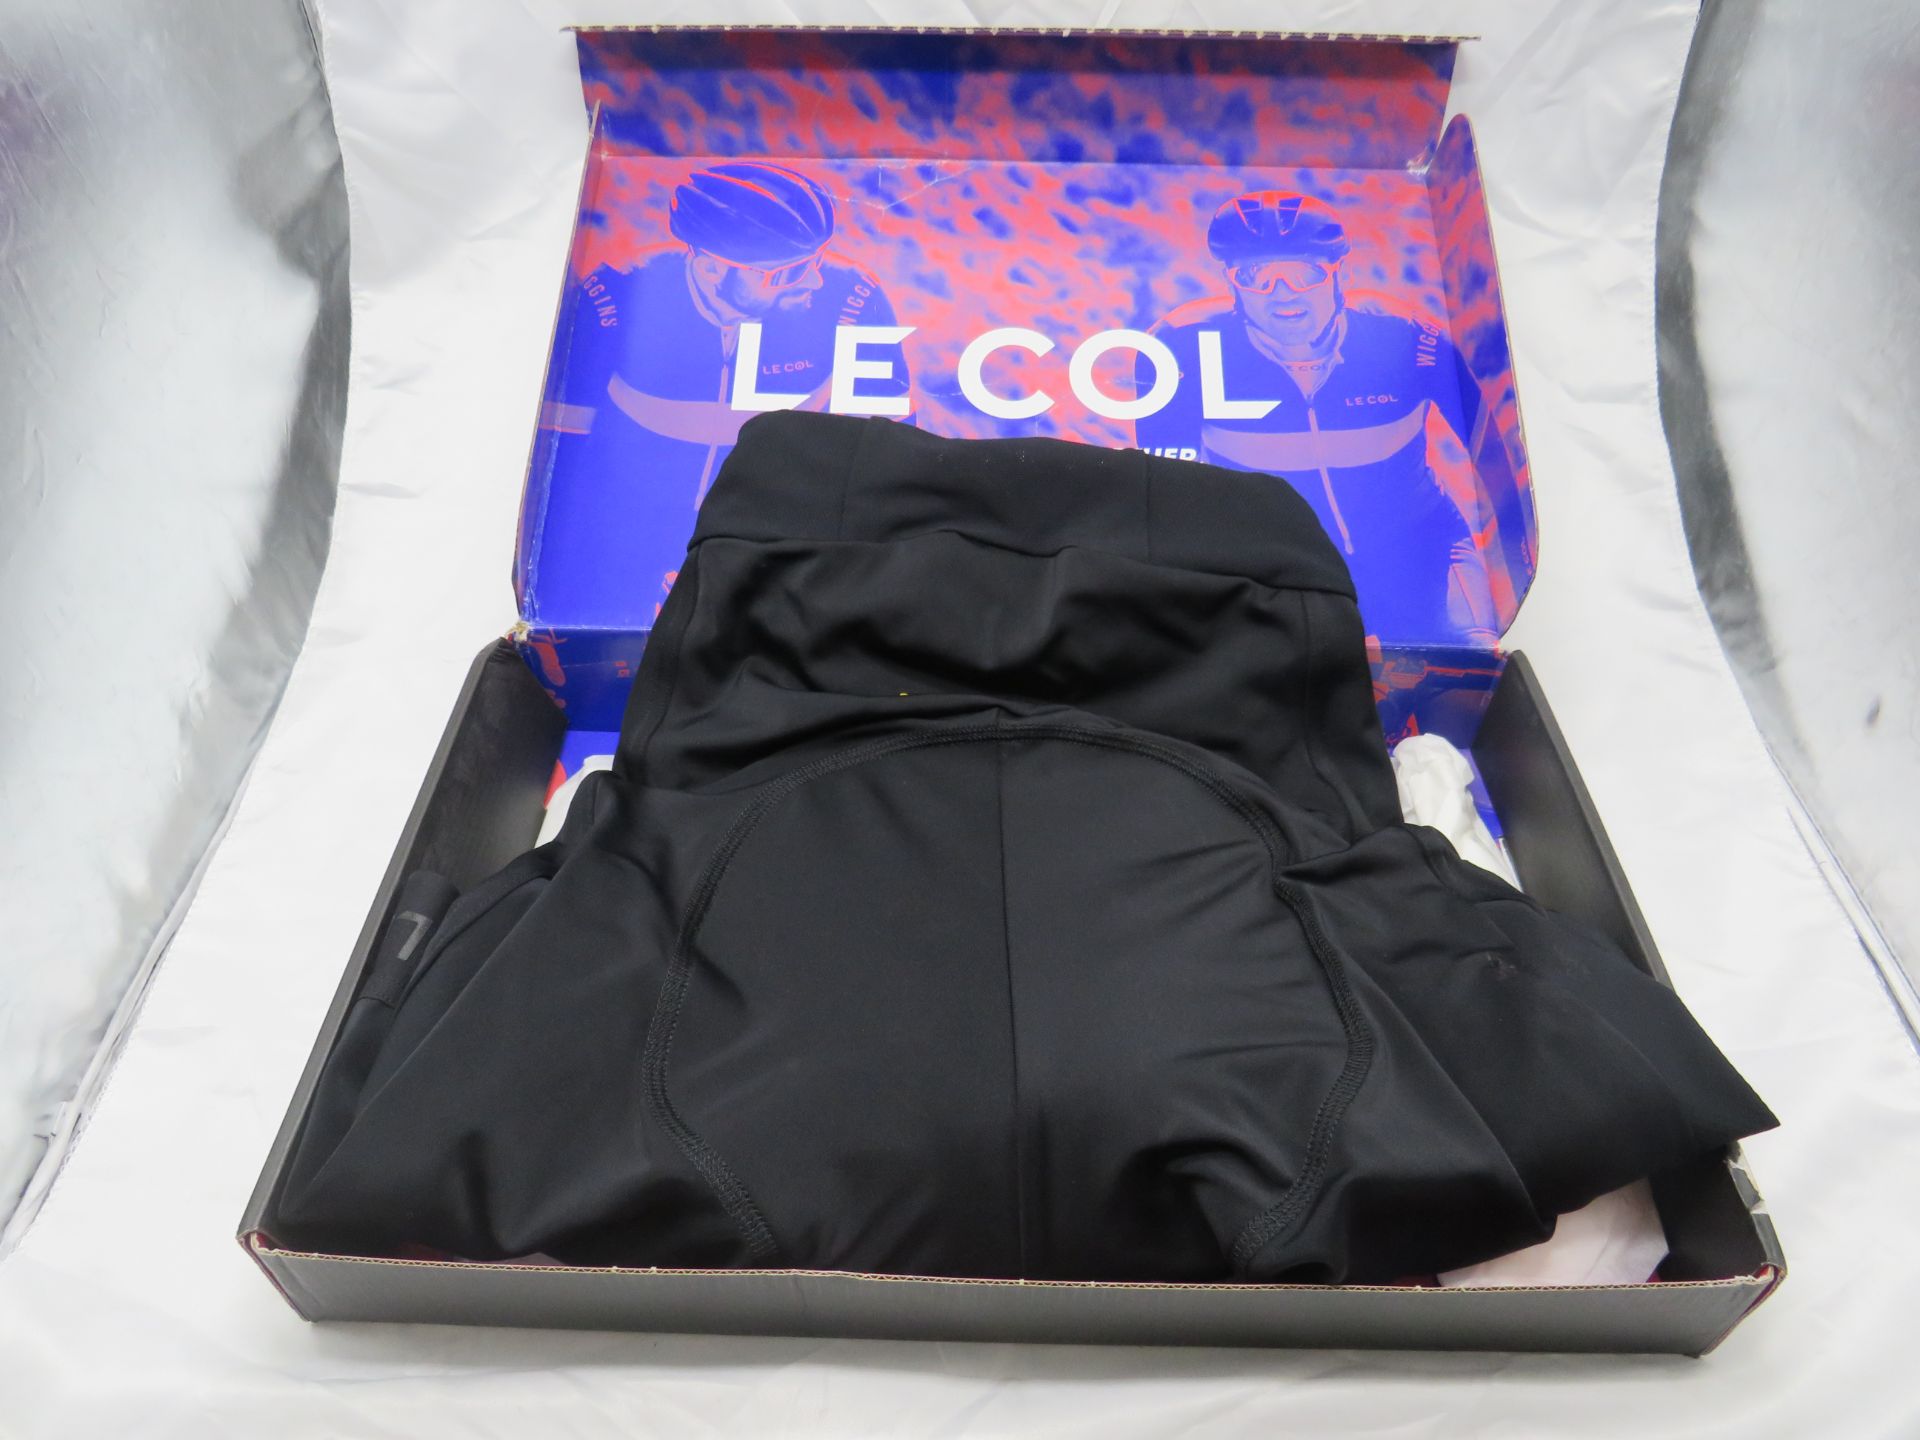 Lecol - Mens HC Bibshorts - Size Small - Original Tags & Boxed.